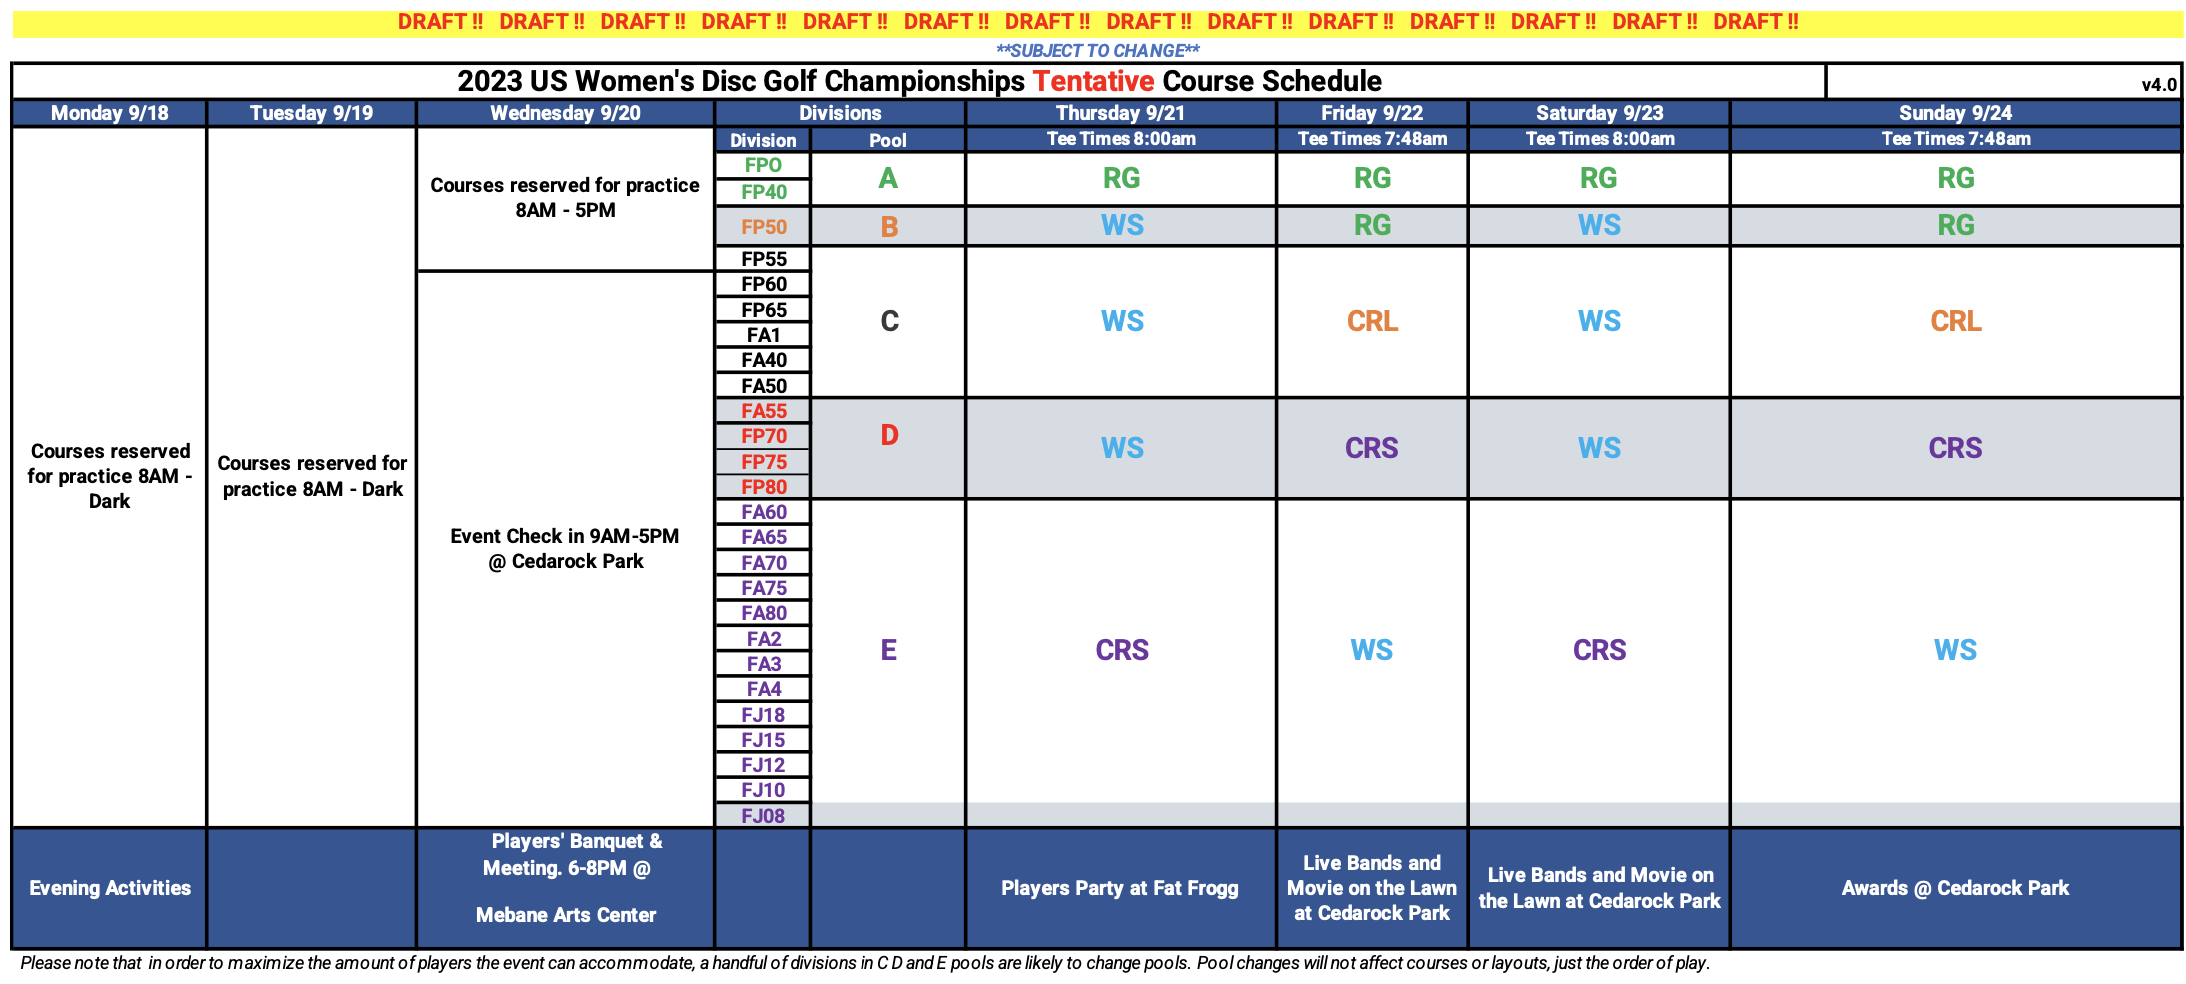 2023 USWDGC Course Schedule Professional Disc Golf Association